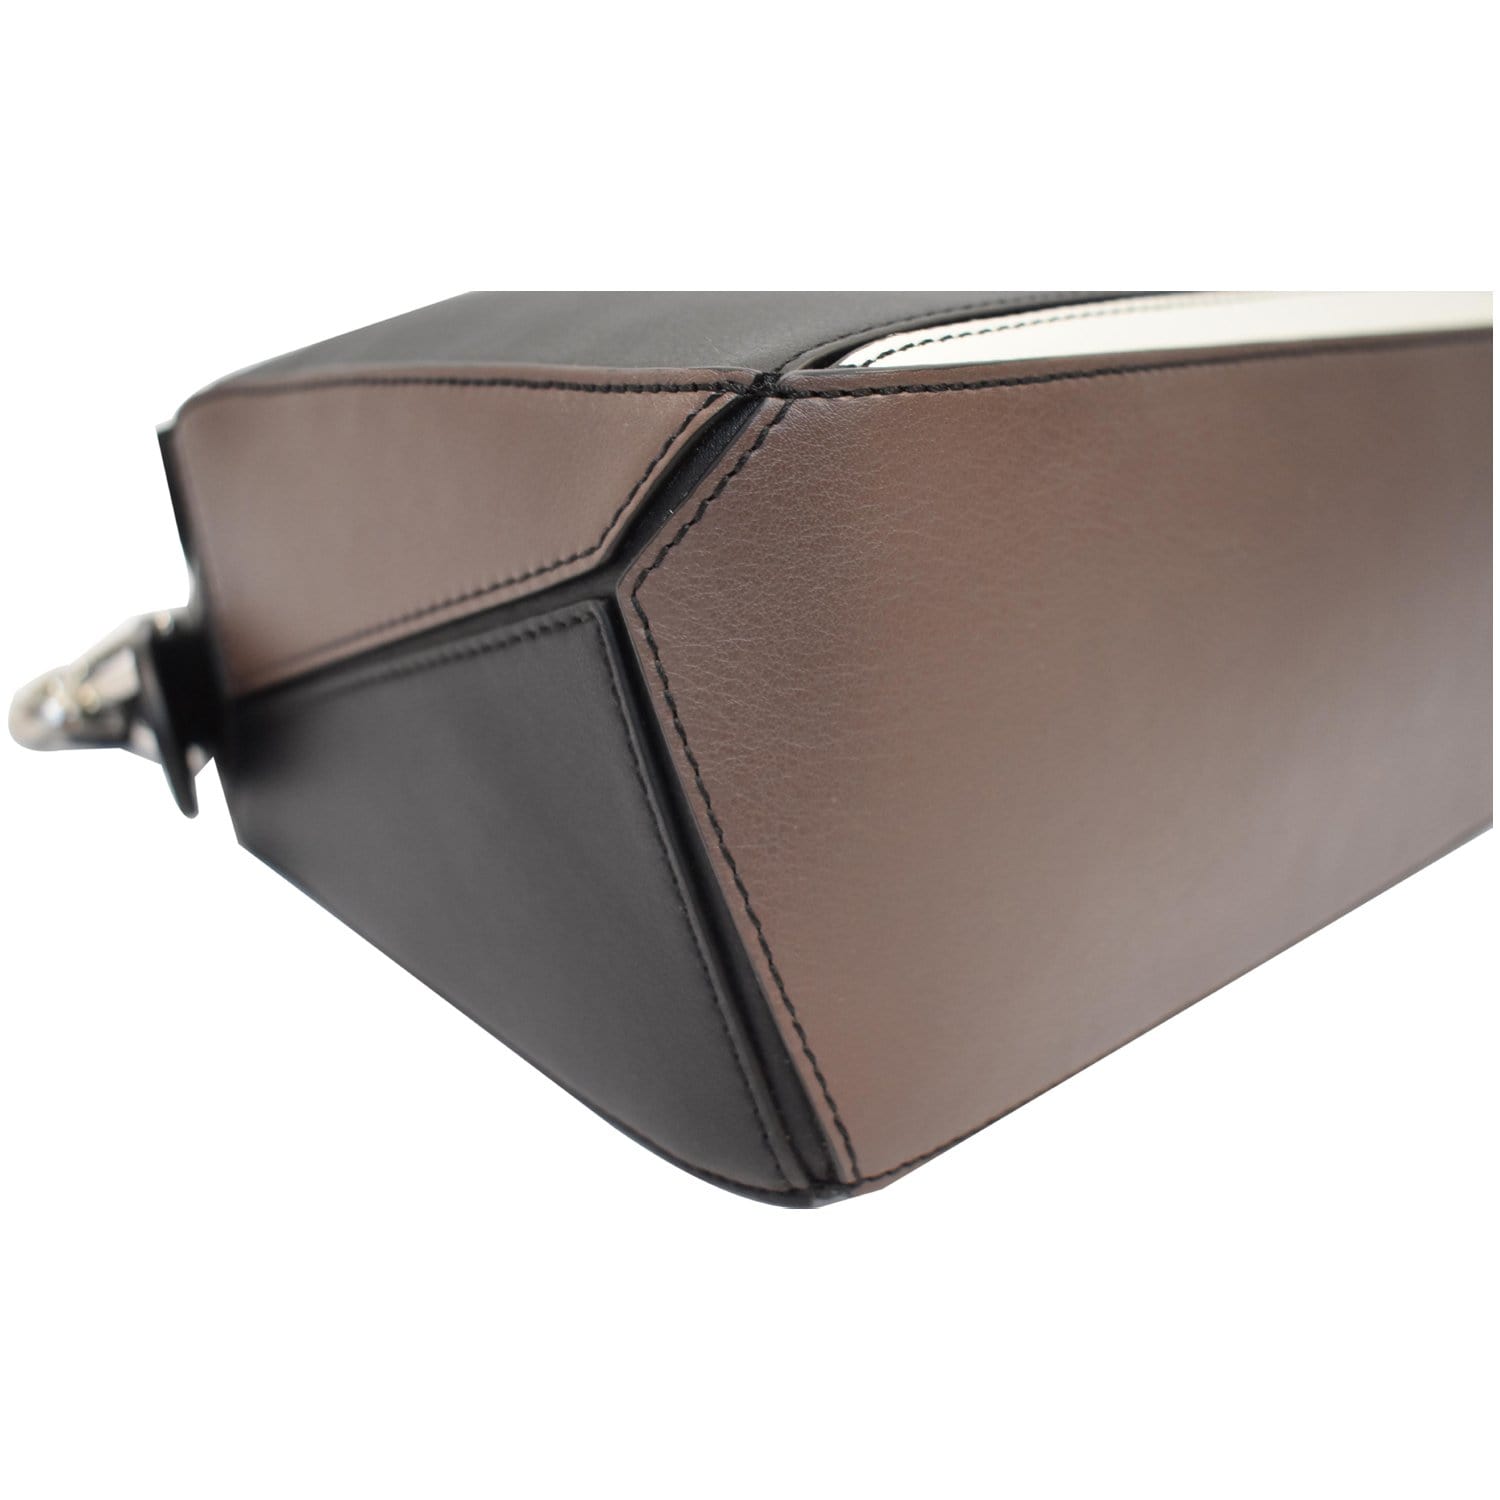 LOEWE Small Puzzle Classic Calfskin Shoulder Bag Black/Taupe